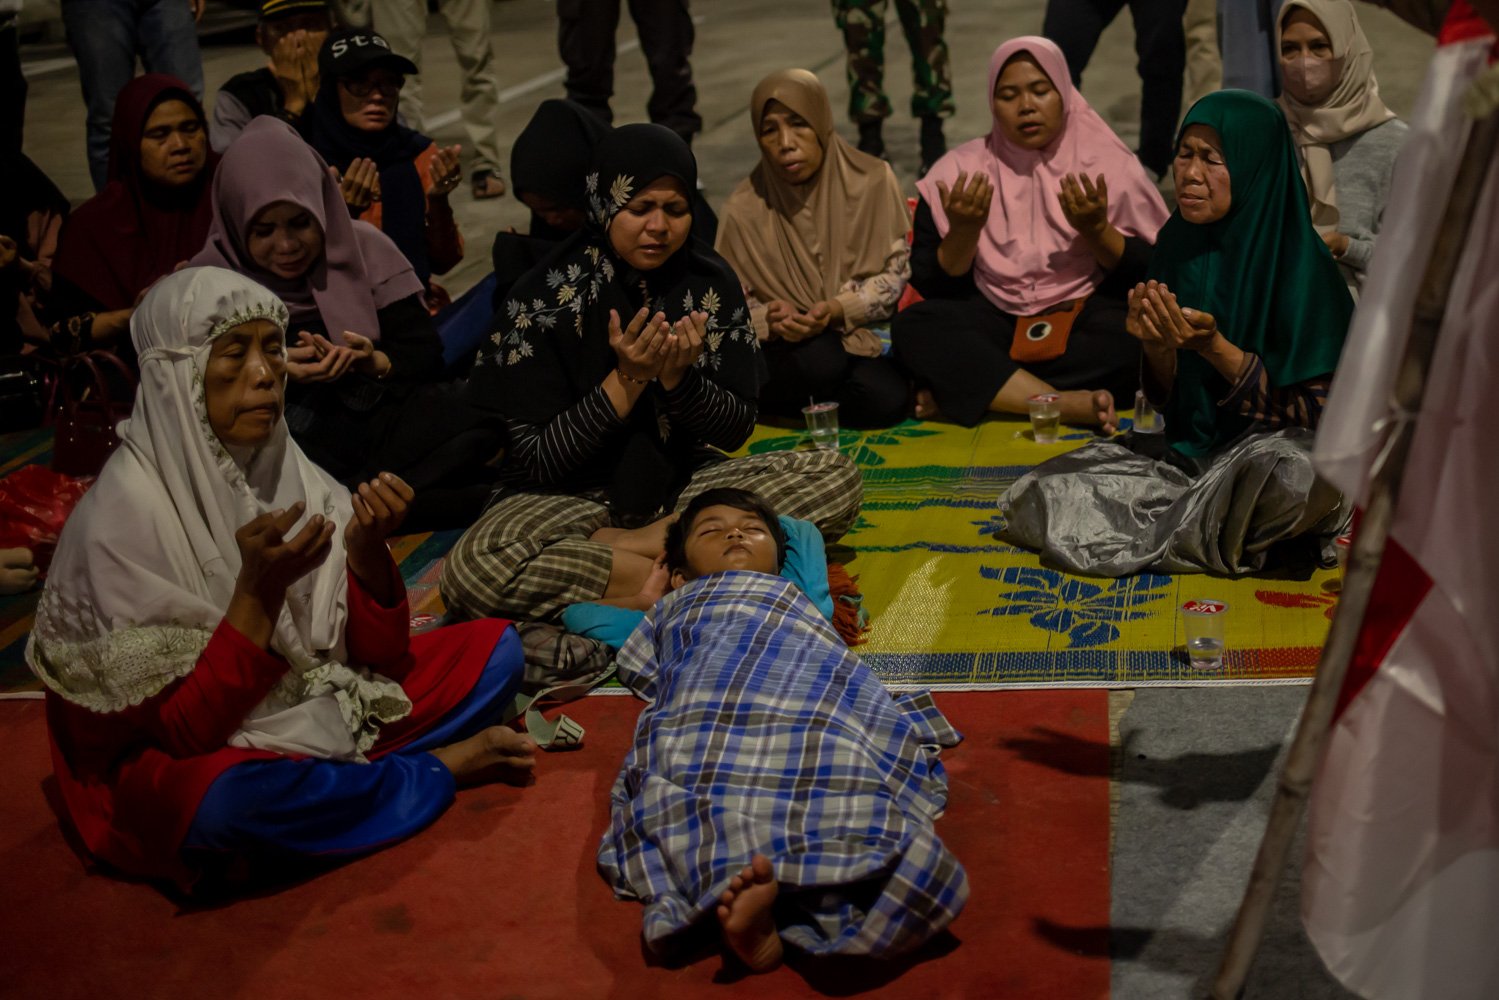 Sejumlah warga ahli waris berdoa bersama usai melaksanakan Shalat Tarawih saat aksi penutupan Jalan Tol Jatikarya di Bekasi, Jawa Barat, Senin (10/4). Aksi penutupan jalan dari pukul 14.50 WIB tersebut menuntut pembayaran konsinyasi dari BPN (Badan Pertanahan Nasional) atas penggunaan tanah seluas 4,2 hektare untuk Tol Cimanggis-Cibitung di Jatikarya.